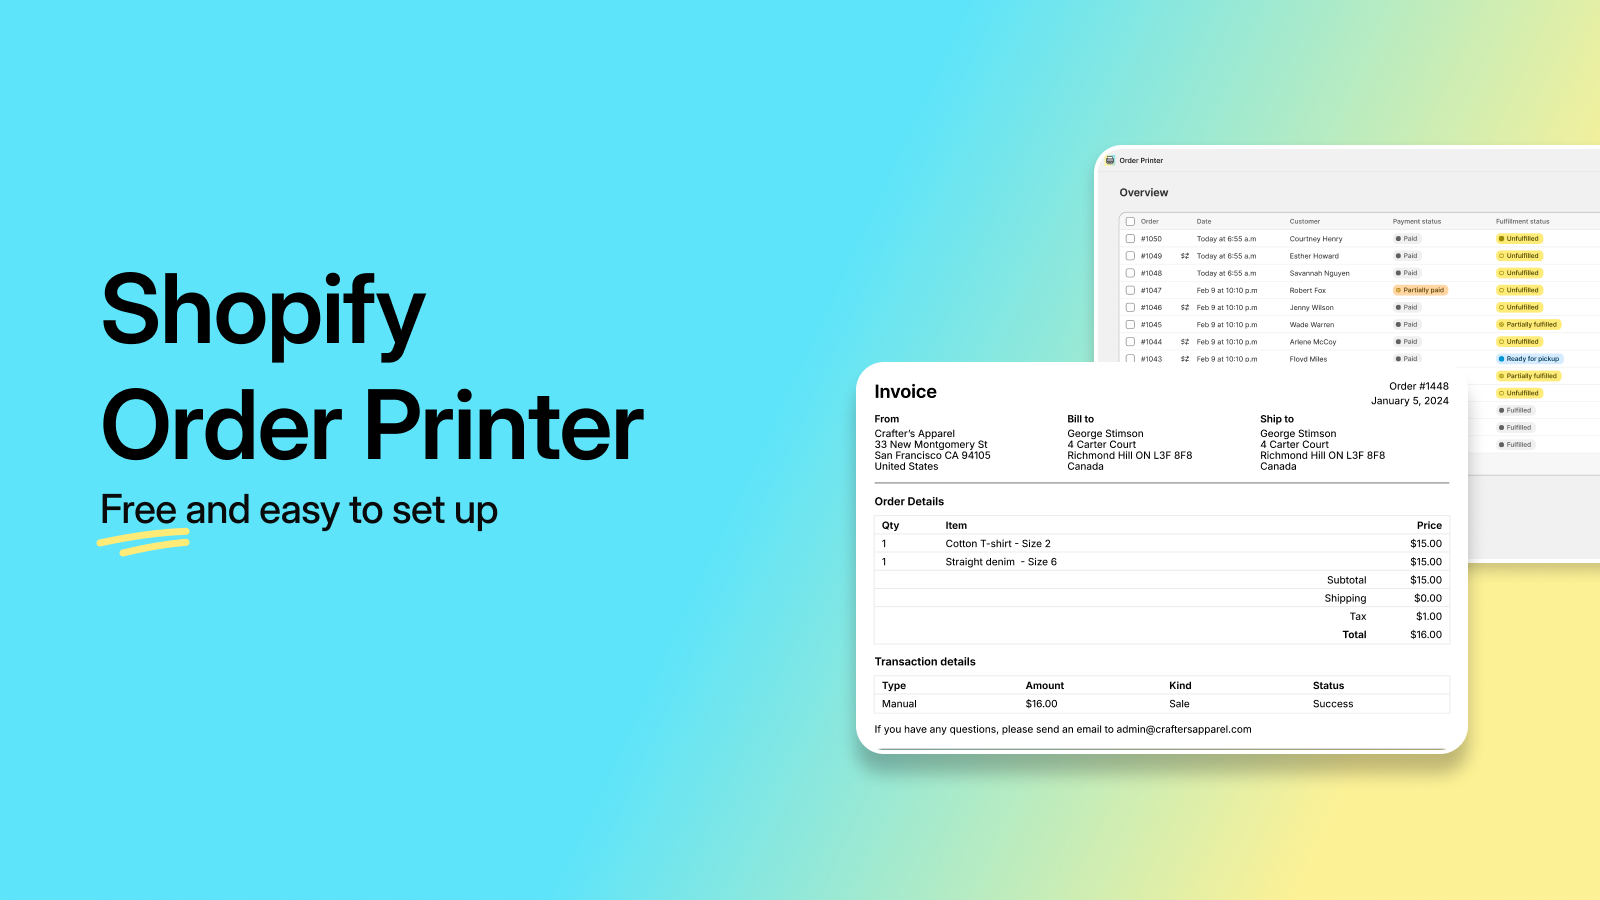 Shopify订单打印机免费且易于设置